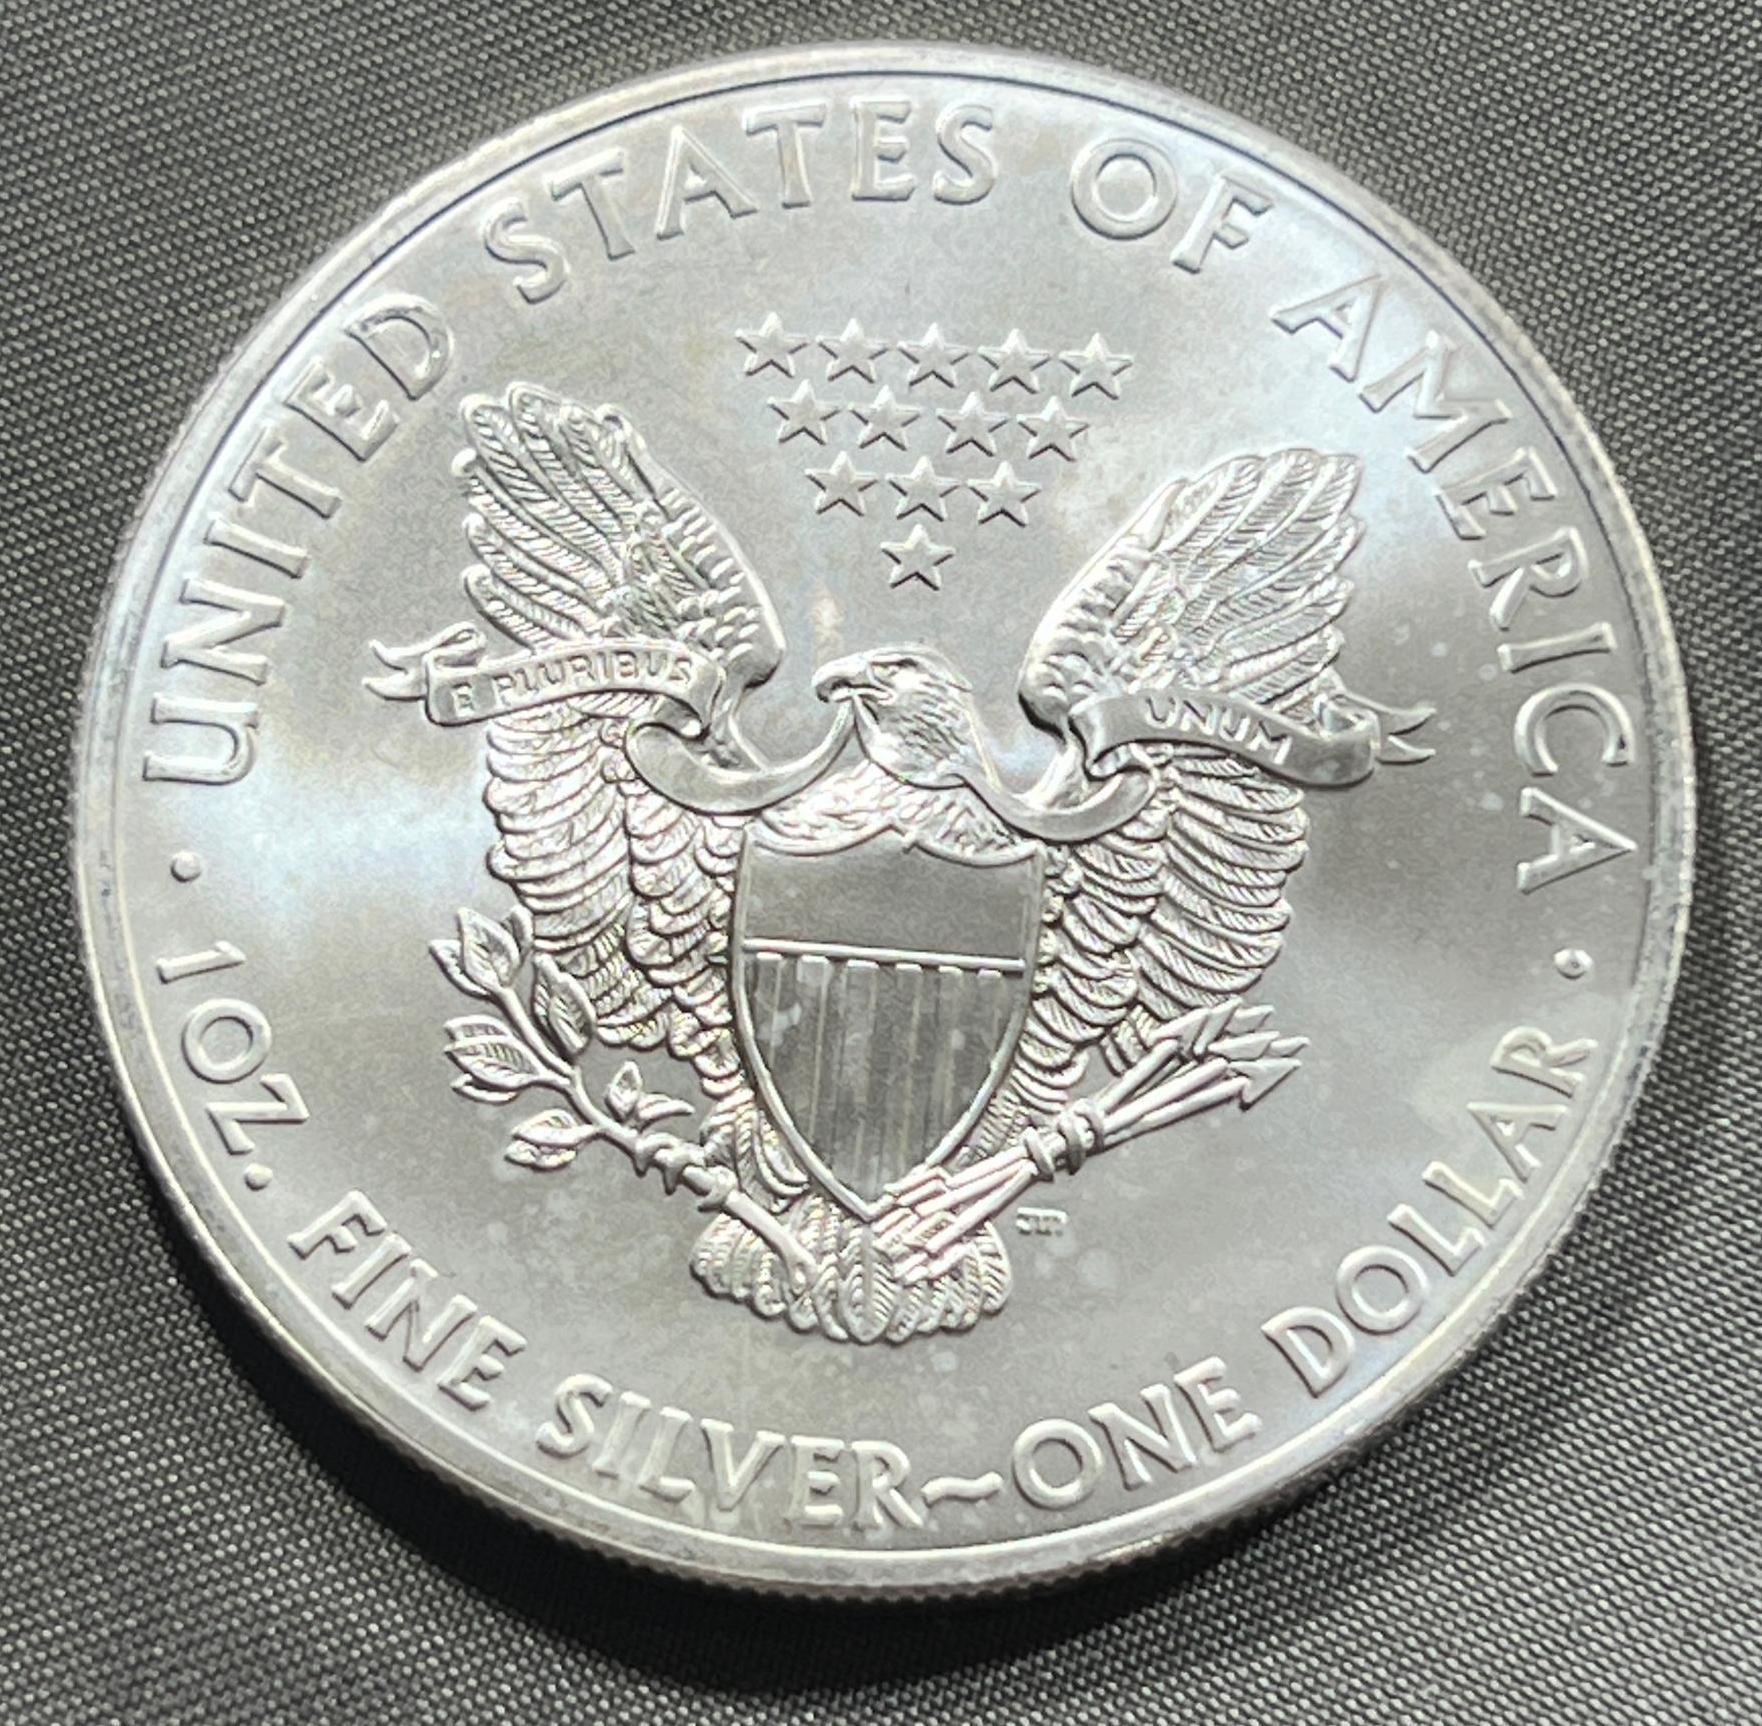 2013 US Silver Eagle Dollar Coin, .999 Fine Silver